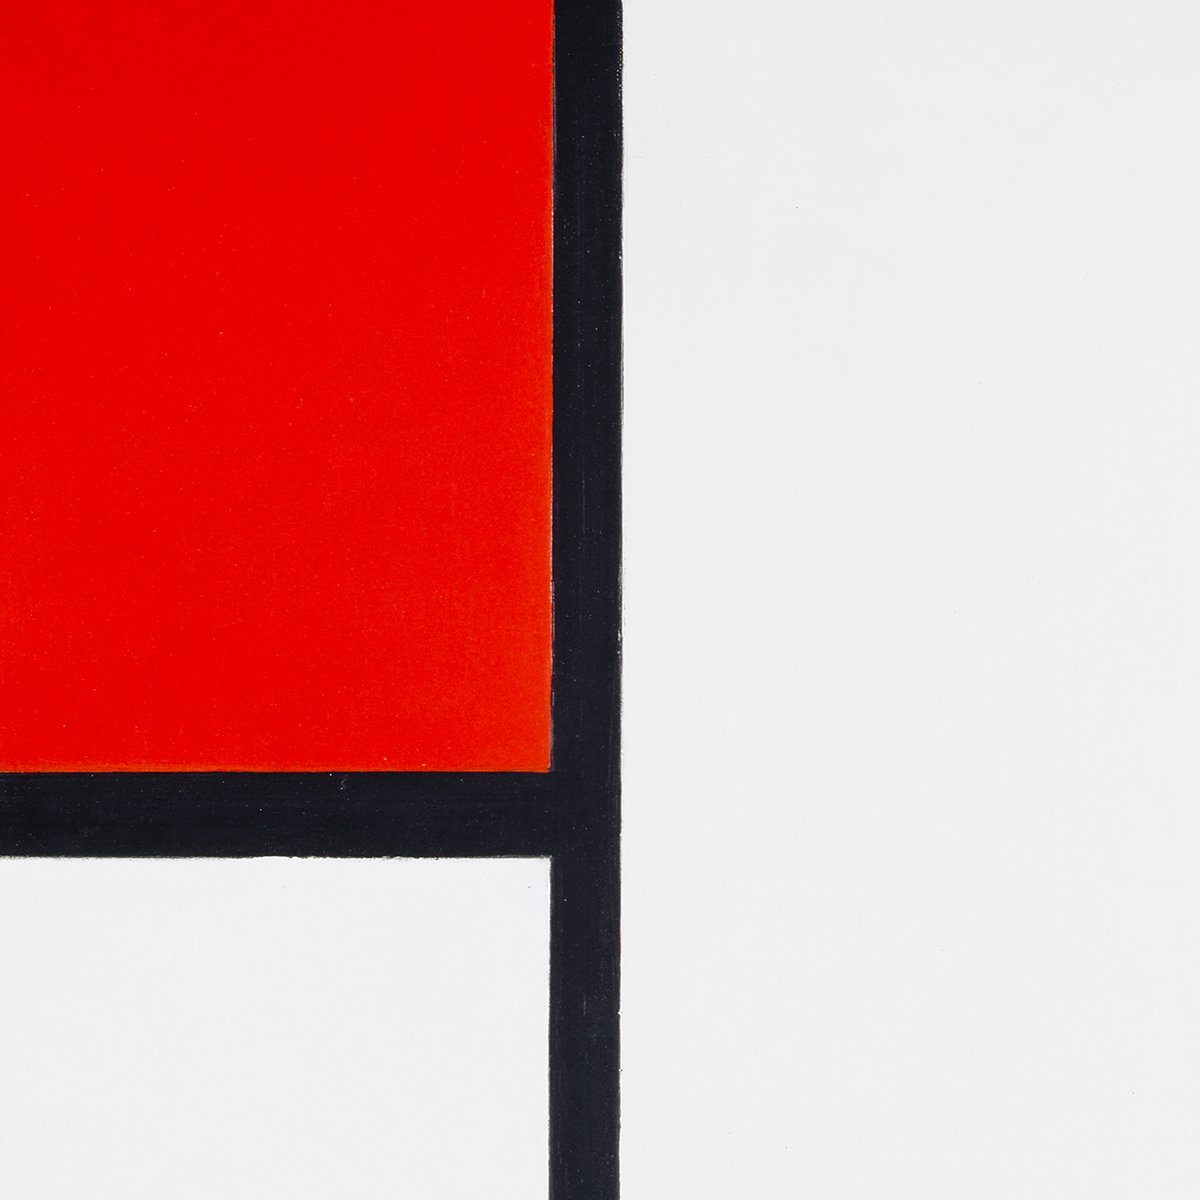 Composition No.1 by Piet Mondrian